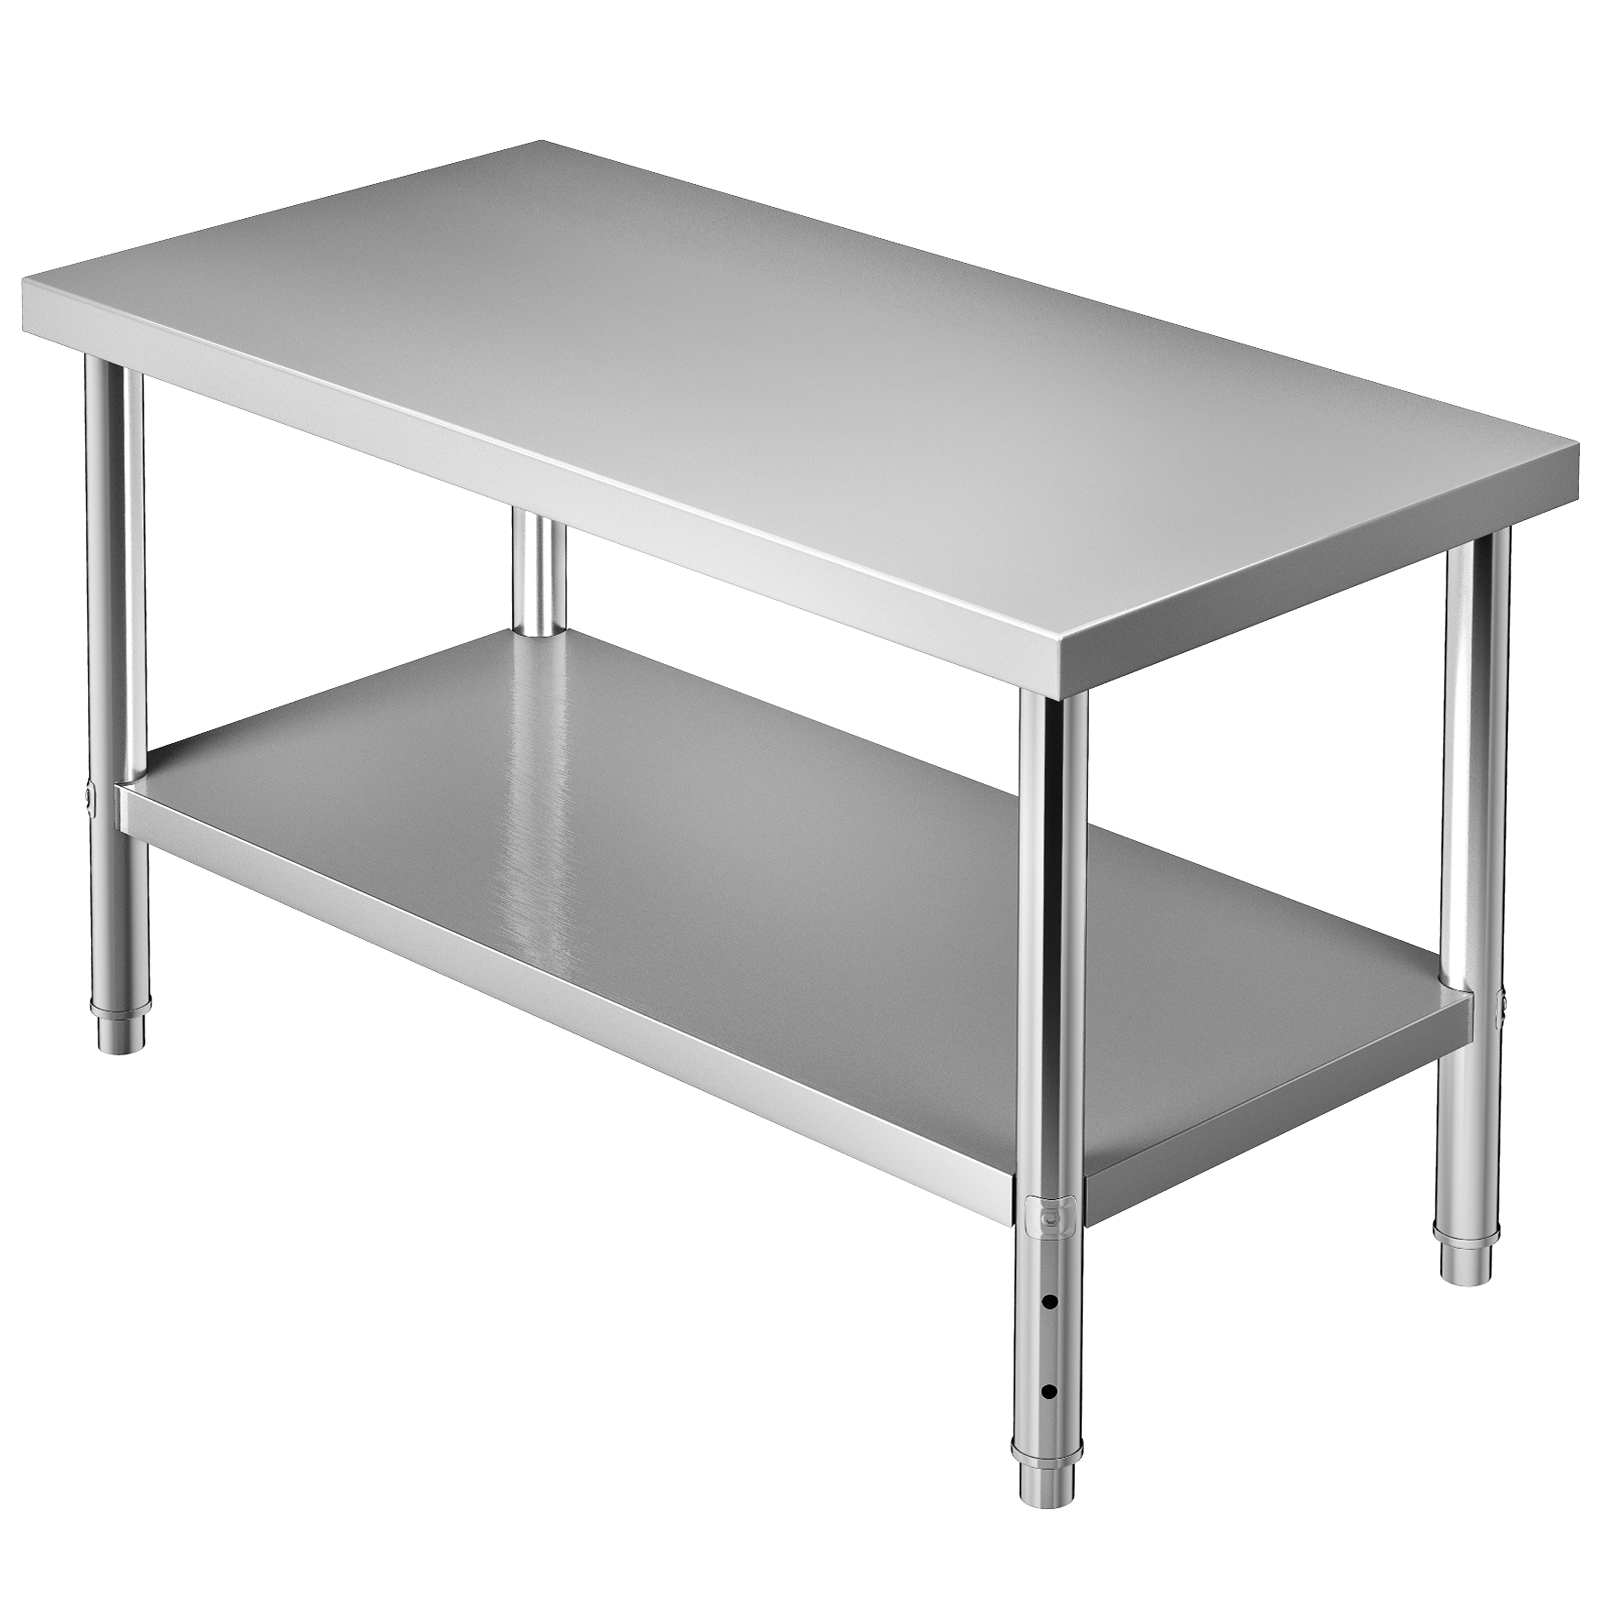 30 x 60 Maple Wood Top Work Table with Adjustable Undershelf